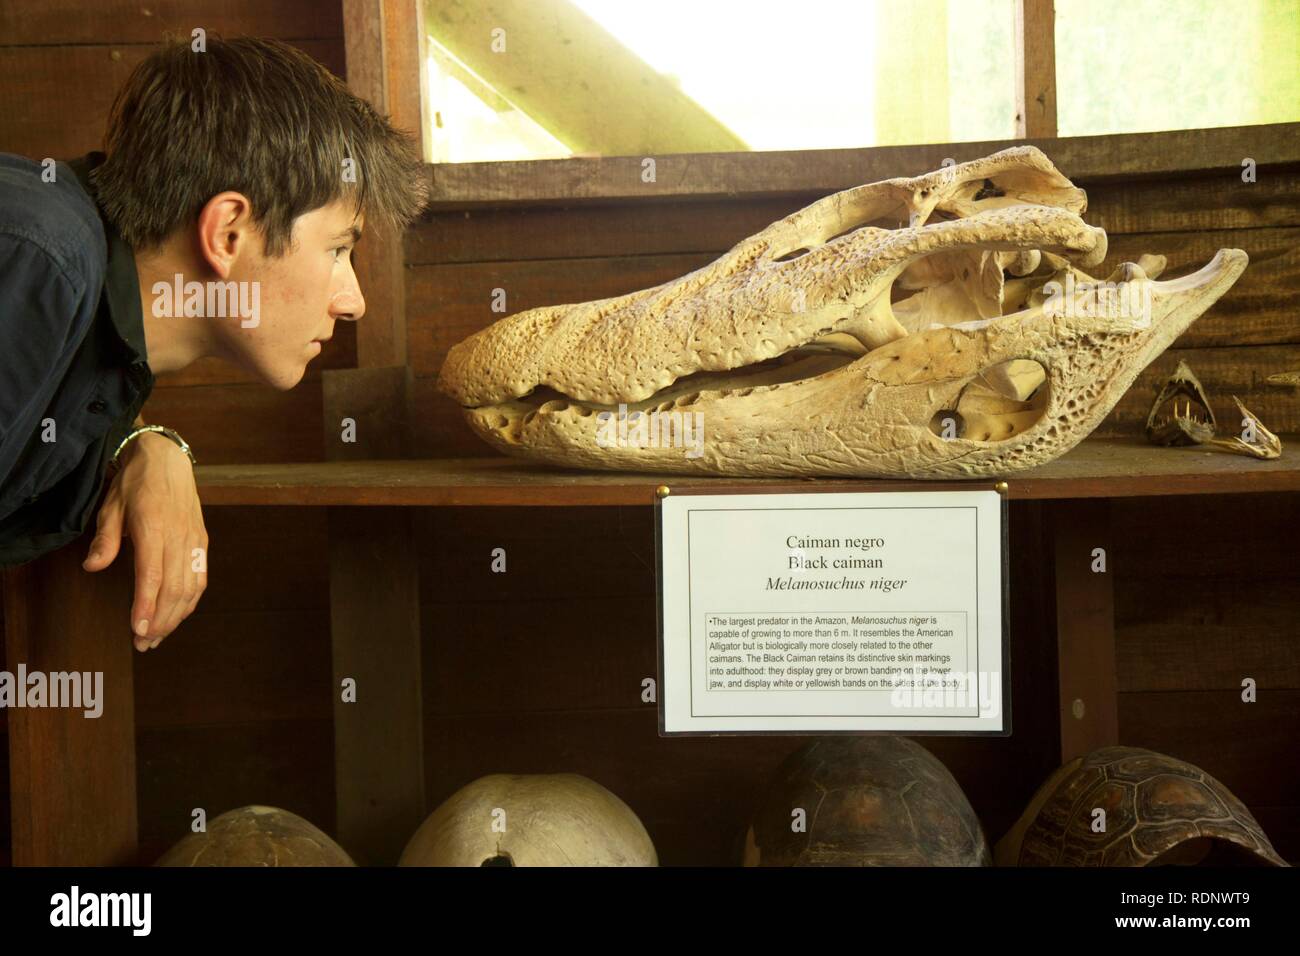 https://c8.alamy.com/comp/RDNWT9/a-boy-looking-at-a-caiman-skull-at-tambopata-national-reserve-peru-south-america-RDNWT9.jpg